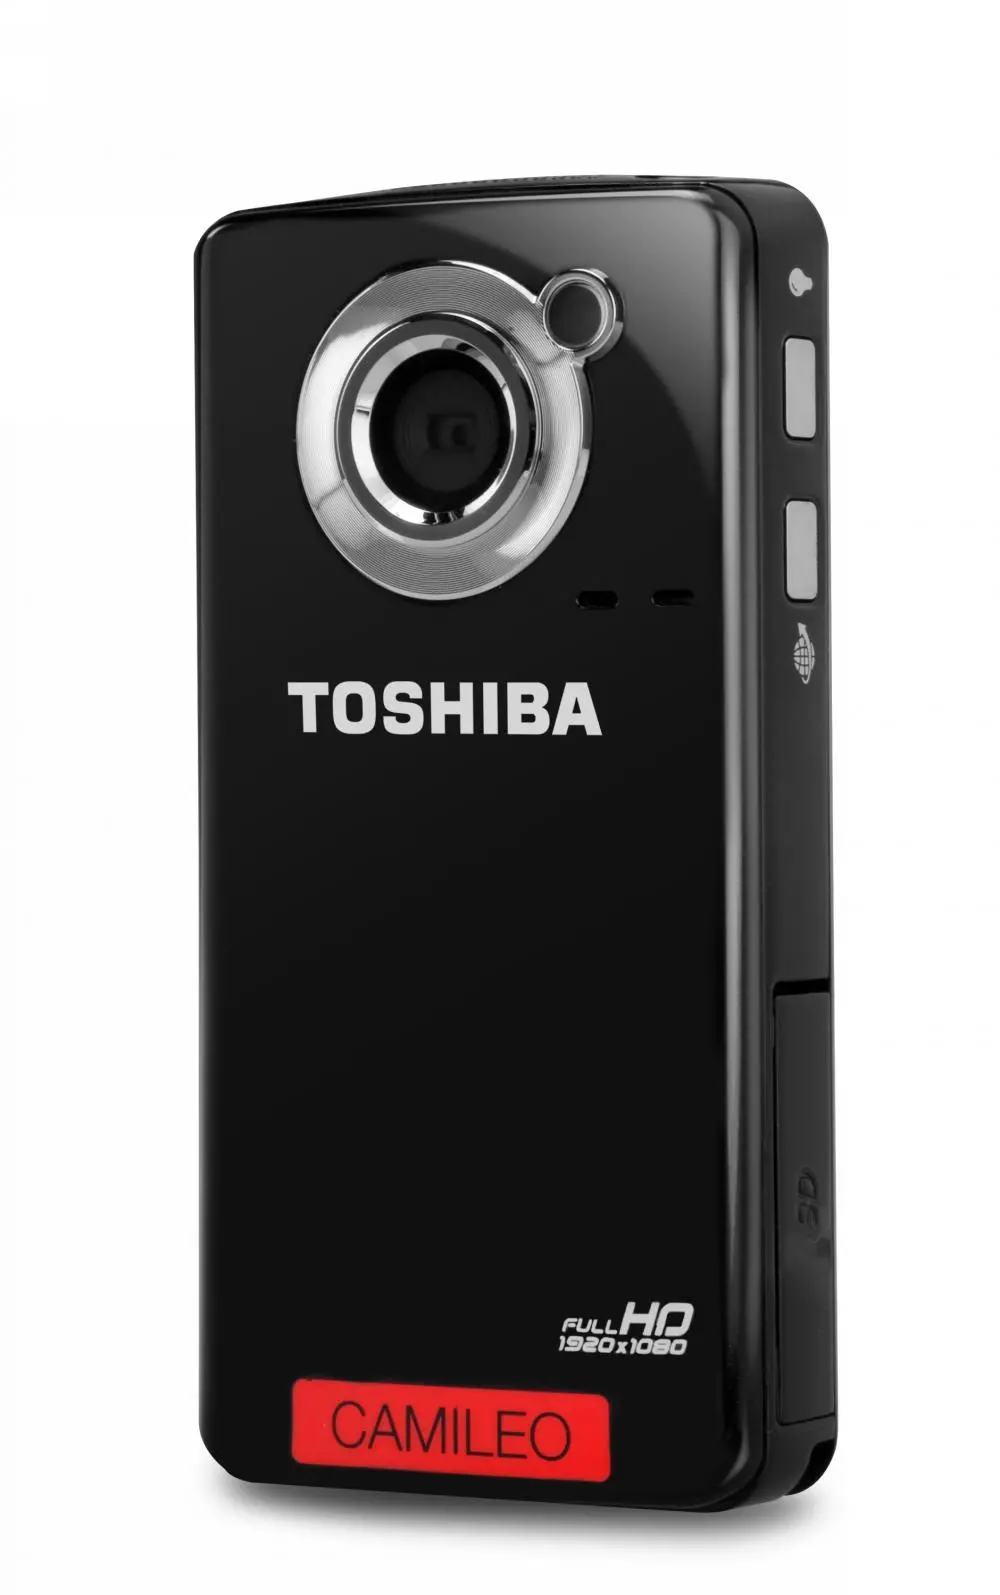 Toshiba CAMILEOÂ B10 HD Camcorder-1